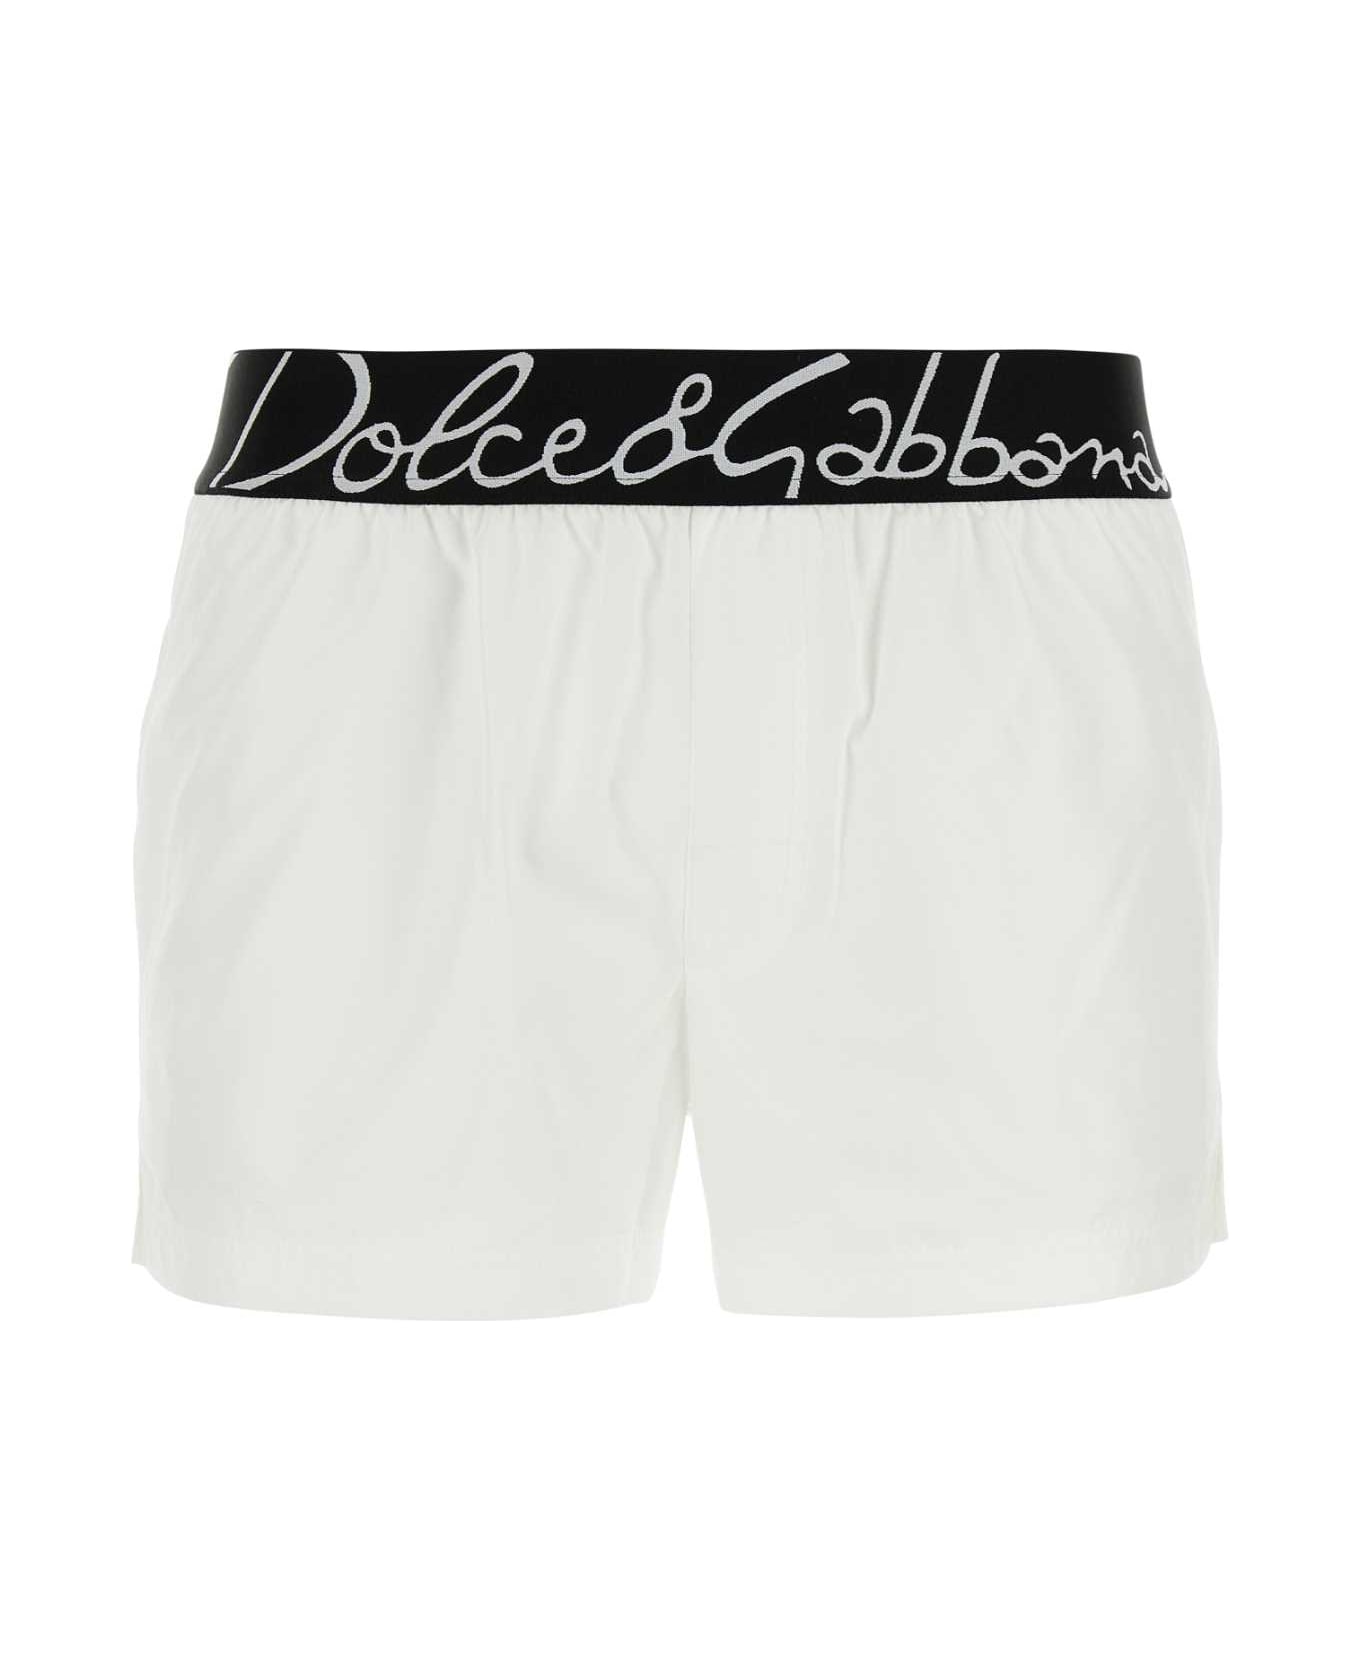 Dolce & Gabbana Swimming Shorts - BIANCOOTTICO